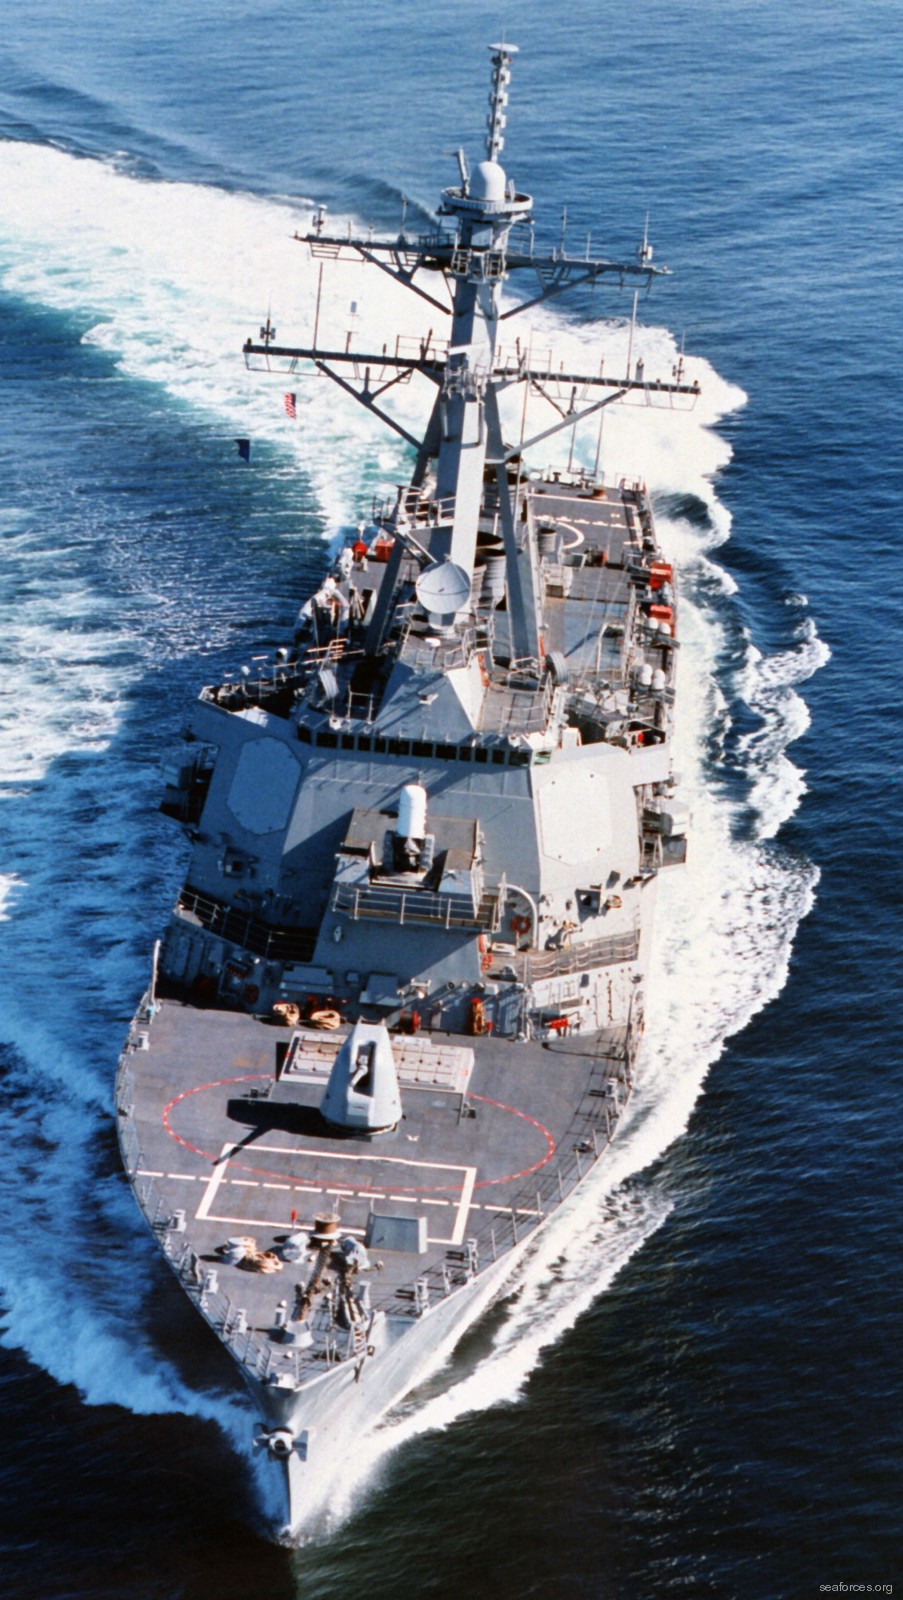 ddg-64 uss carney destroyer arleigh burke class navy 82 sea trials bath iron works